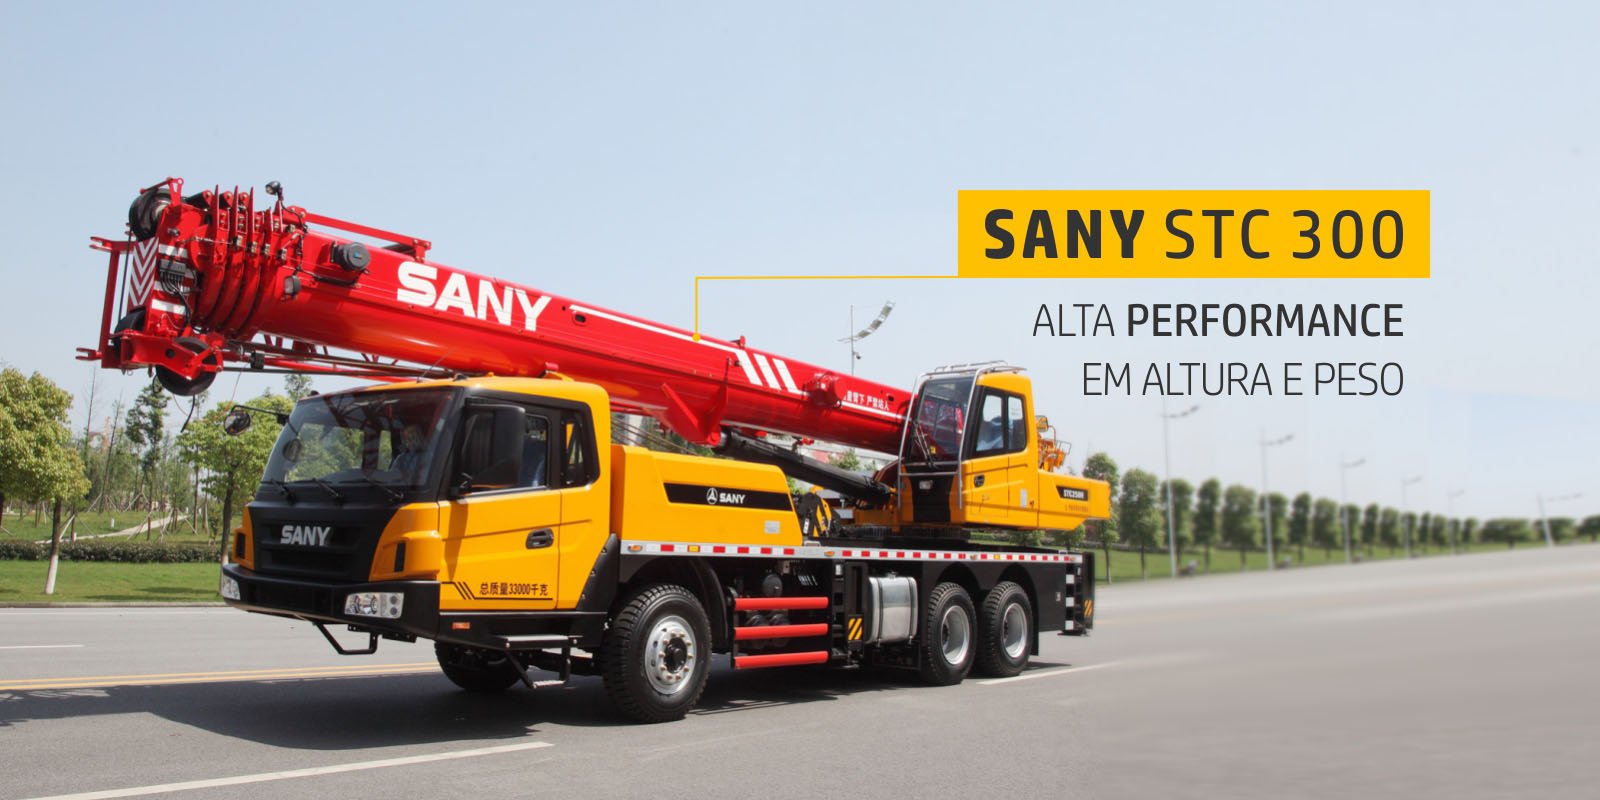 Sany STC 300